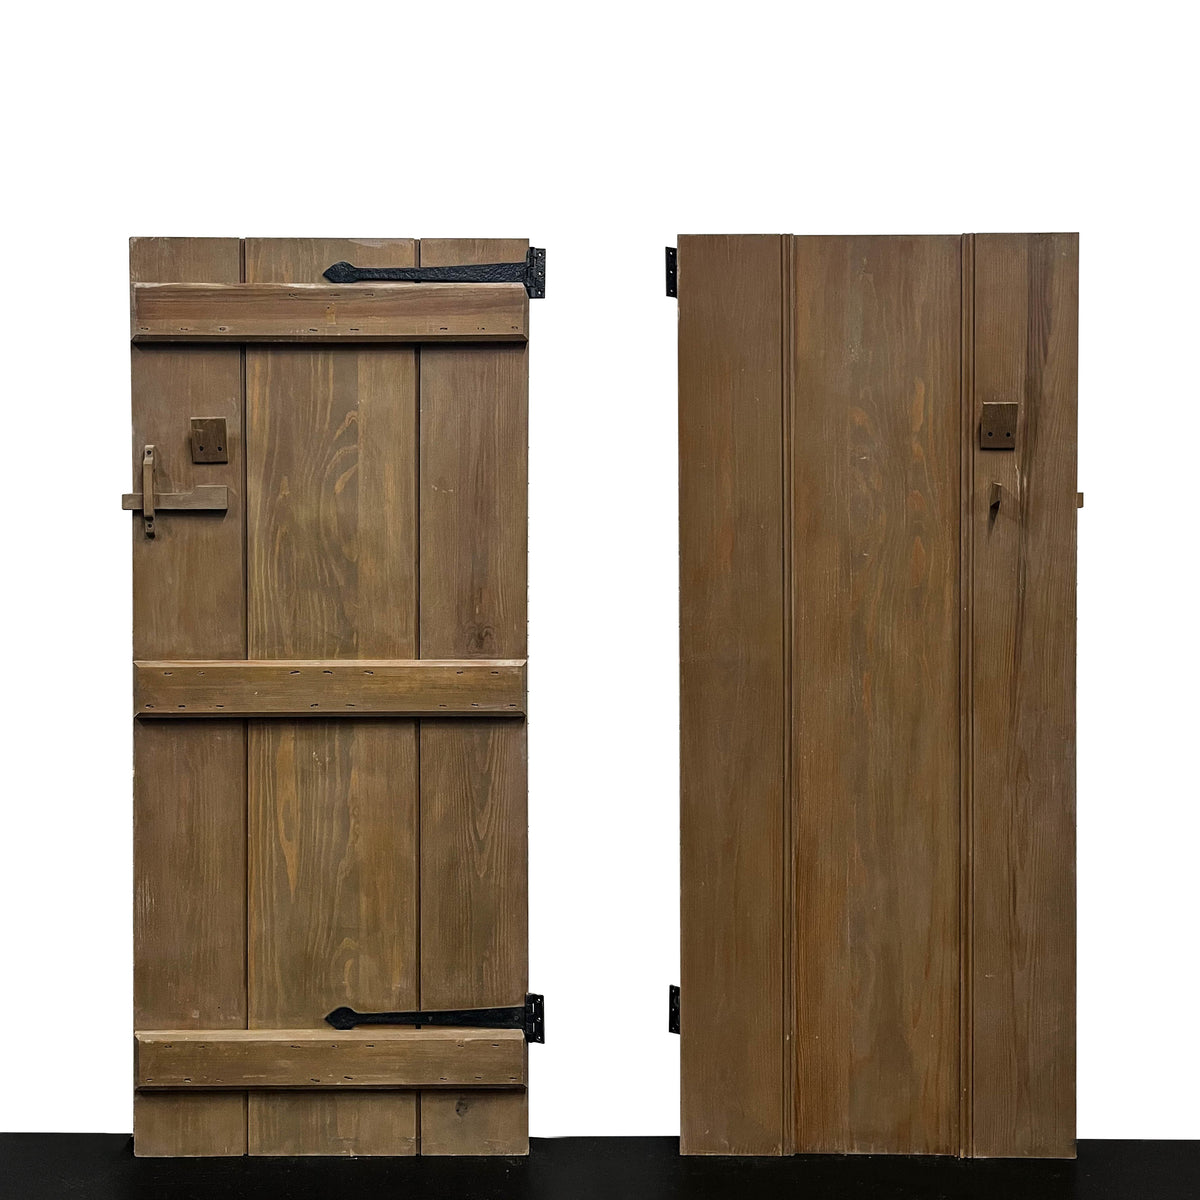 Antique Victorian Pine Latch Door - 193.5cm x 83cm | The Architectural Forum